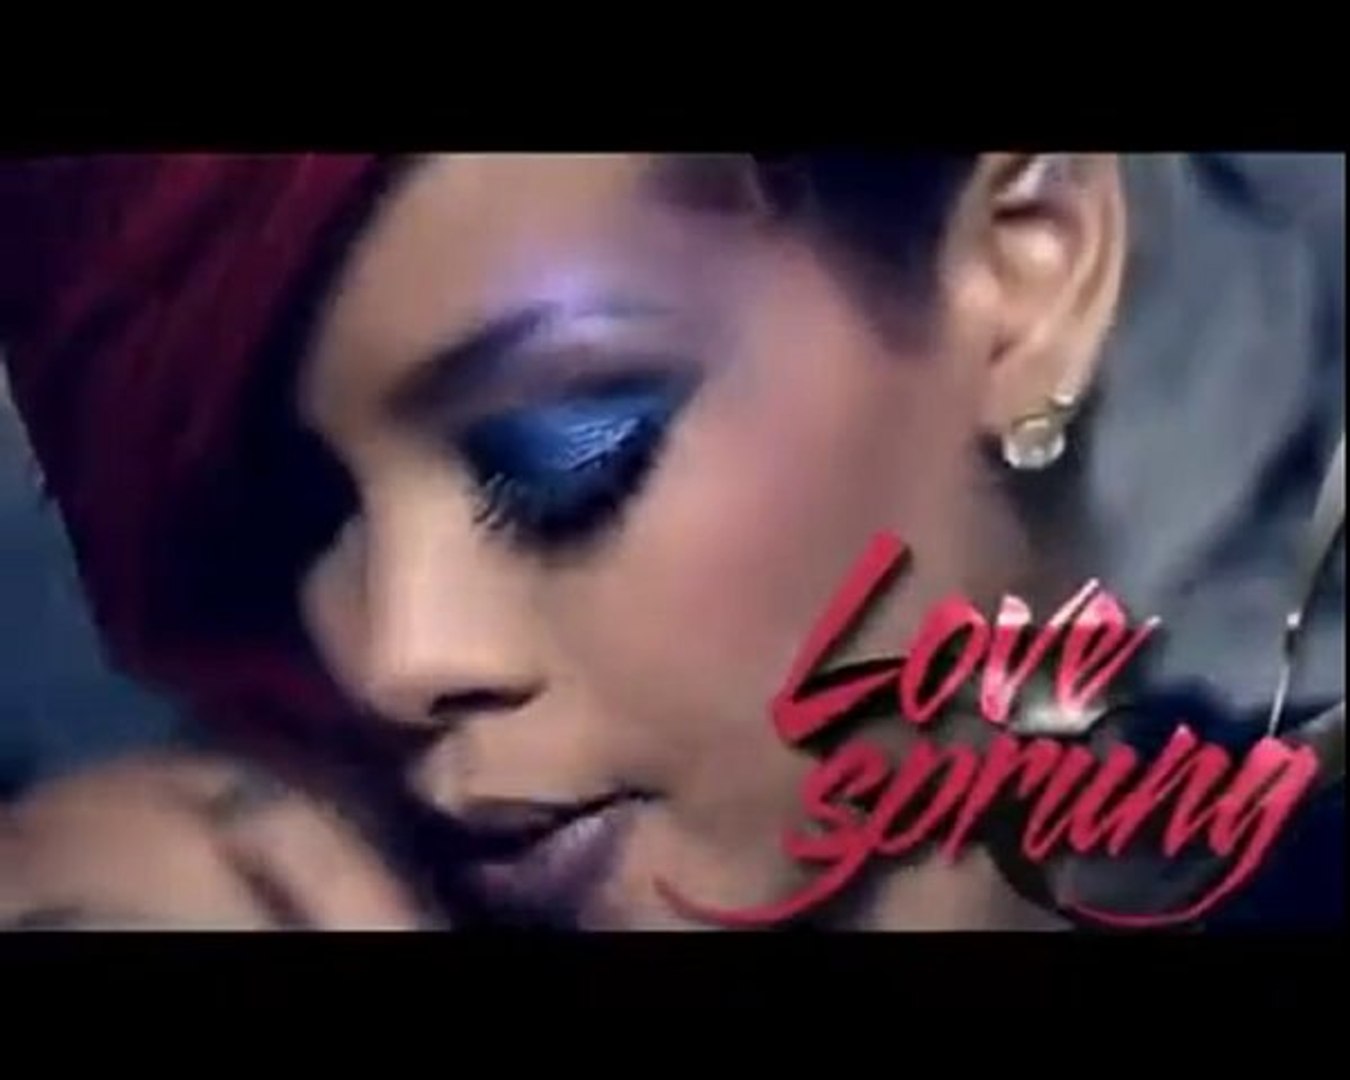 Rihanna - Suicide Lyrics - video Dailymotion